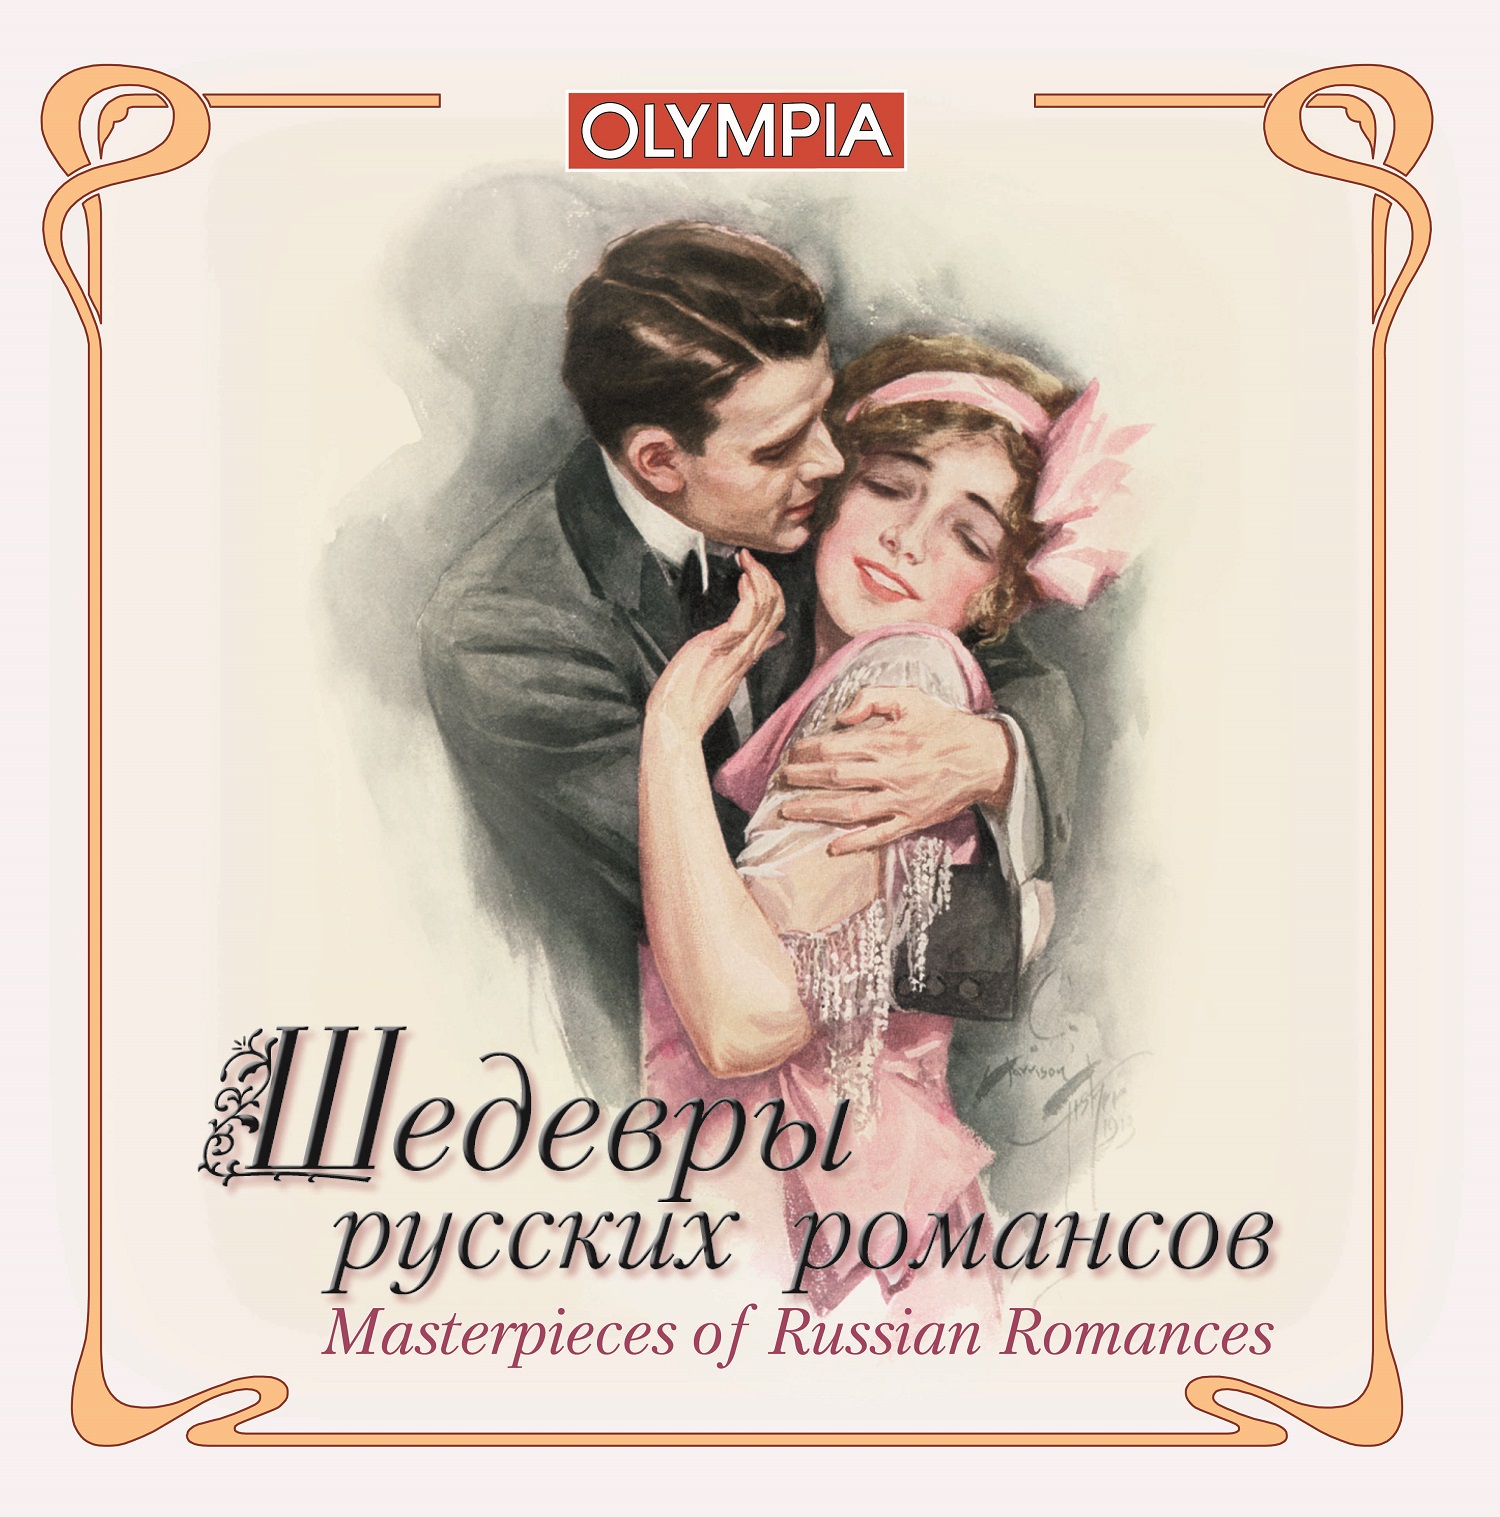 Russian romance